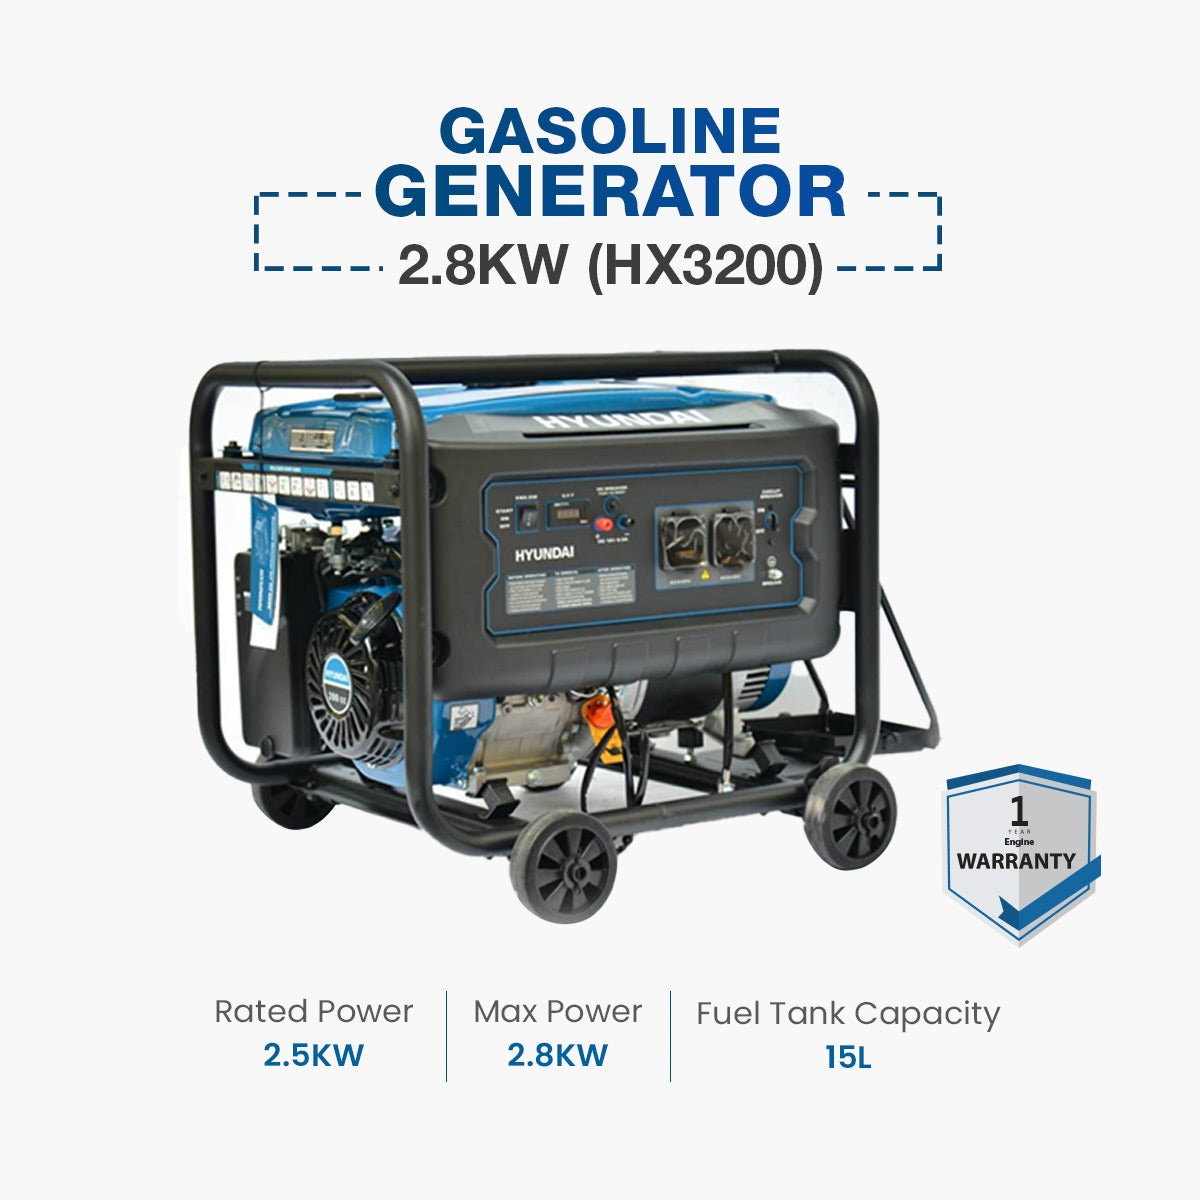 Hayundi Gasoline Generator 2.8KW (HX3200) 1 Year Brand Warranty